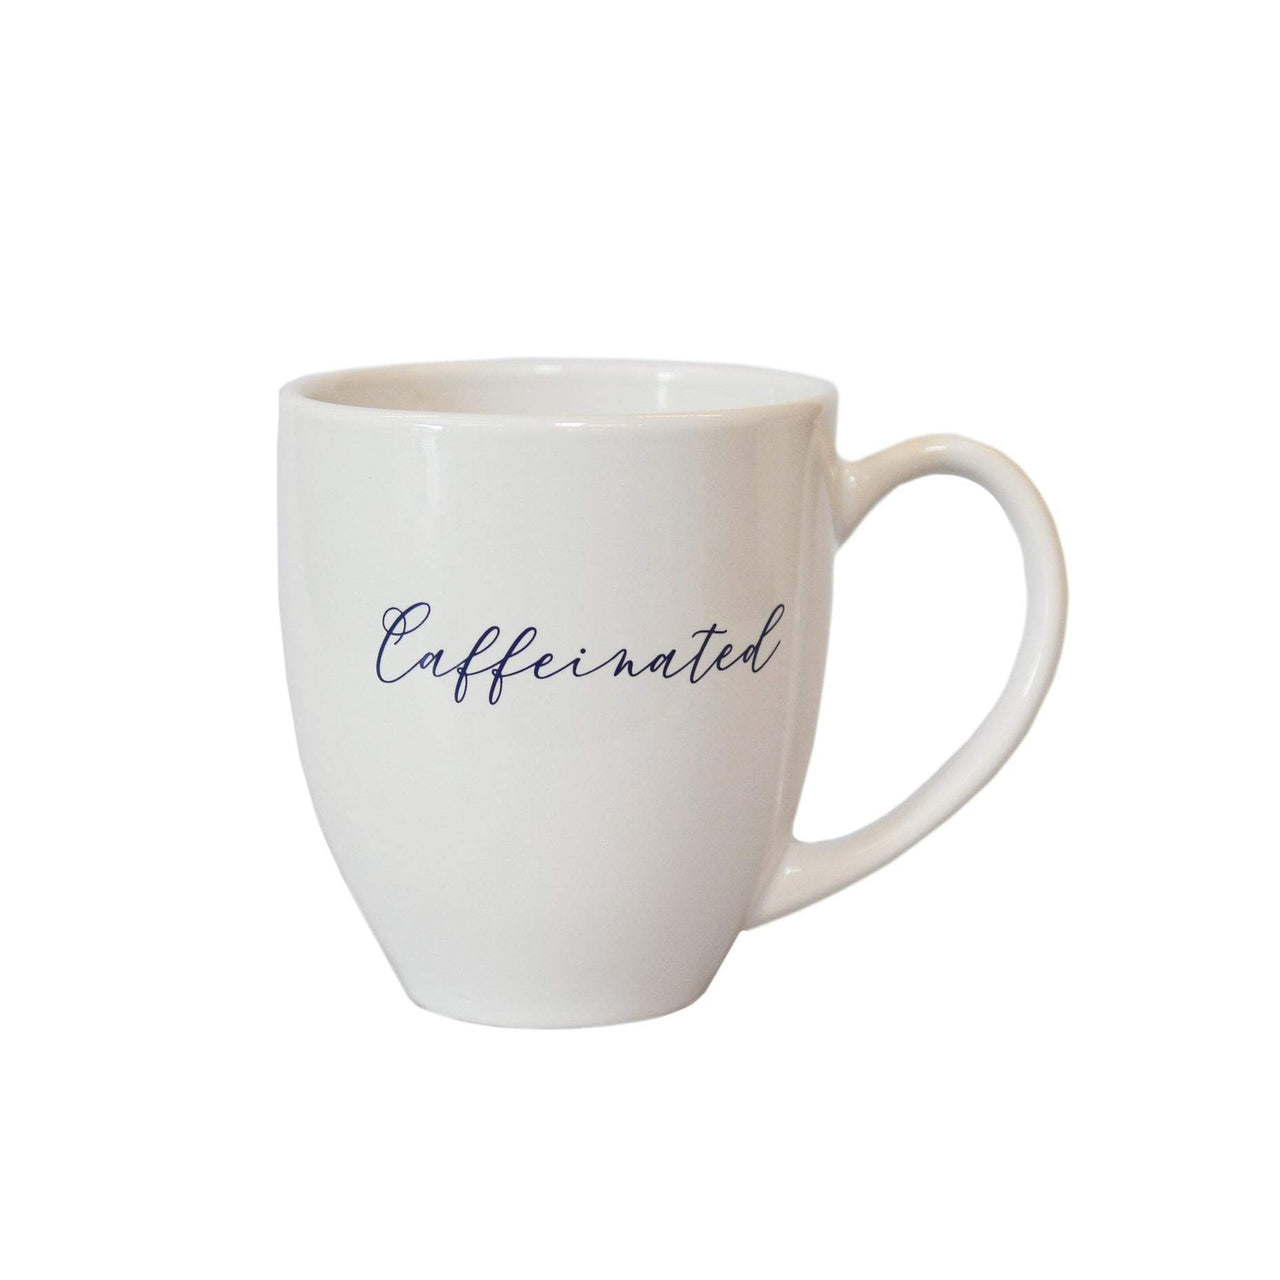 Add a Caffeinated Mug